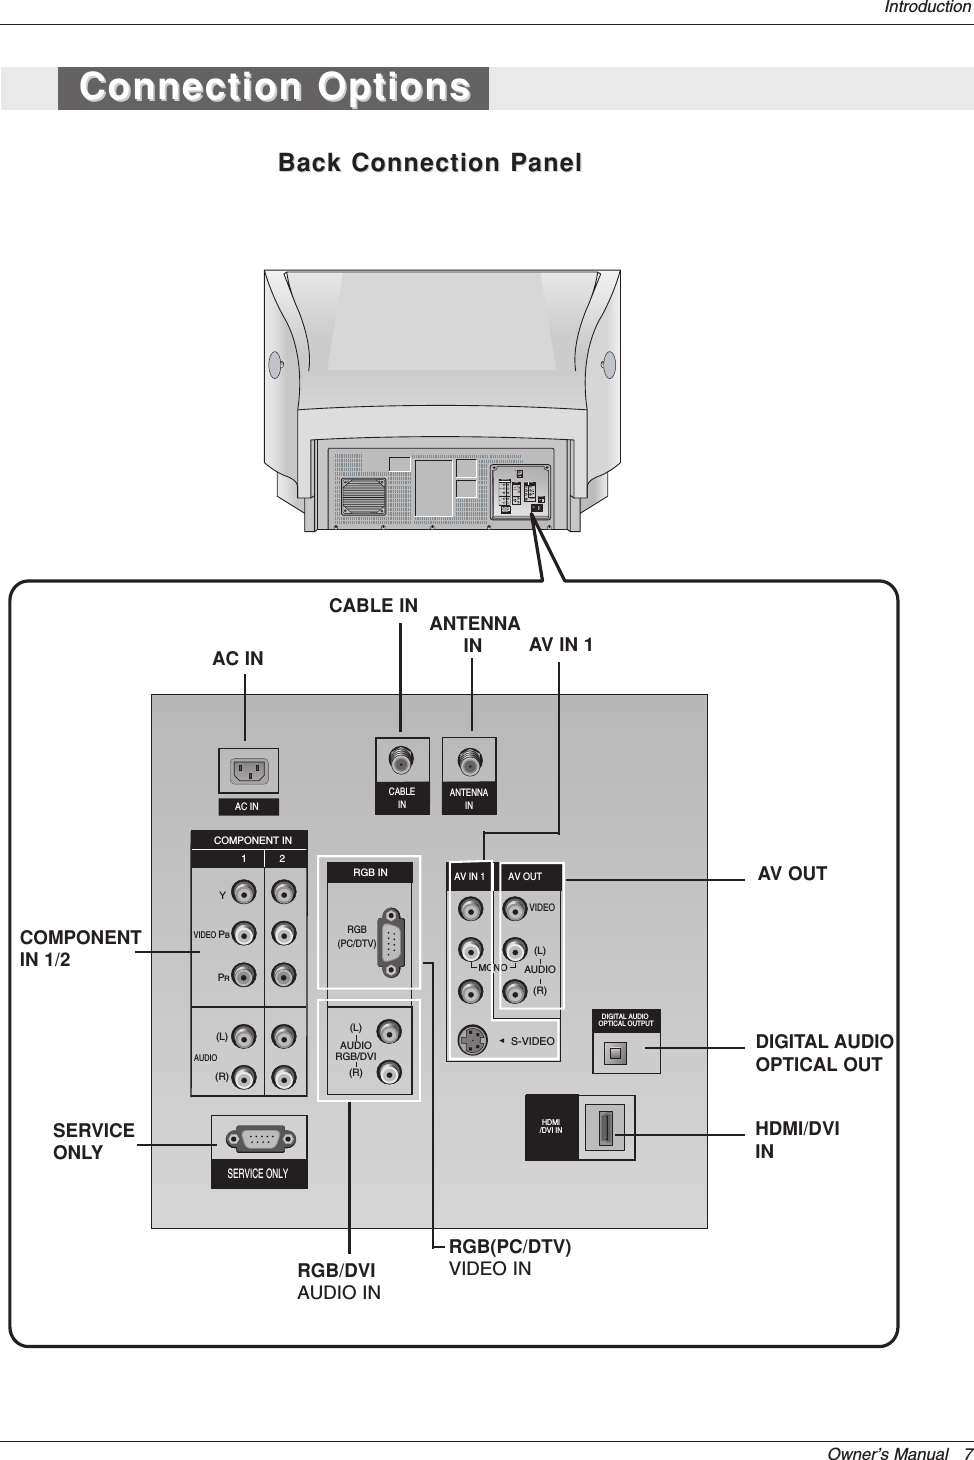 Owner’s Manual   7IntroductionRGB(PC/DTV)S-VIDEOPR PBYMONORGB INCOMPONENT IN21(L)(R)AUDIORGB/DVI(L)(R)AUDIOVIDEO(L)(R)AV IN 1 AV OUTDIGITAL AUDIO OPTICAL OUTPUTCABLEINSERVICE ONLYVIDEOAUDIOHDMI/DVI INRGB(PC/DTV)S-VIDEOPR PBYMONORGB INCOMPONENT IN21(L)(R)AUDIORGBDVI(L)(R)AUDIOVIDEO(L)(R)AV IN 1 AV OUTDIGITAL AUDIO OPTICAL OUTPUTANTENNASERVICE ONLYVIDEOAUDIOHDMI/DVI INANTENNAINAC INBack Connection PanelBack Connection PanelConnection OptionsConnection OptionsCABLE INCOMPONENTIN 1/2SERVICEONLYHDMI/DVIINDIGITAL AUDIOOPTICAL OUTAV IN 1AV OUTRGB/DVIAUDIO INANTENNAINAC INRGB(PC/DTV)VIDEO IN